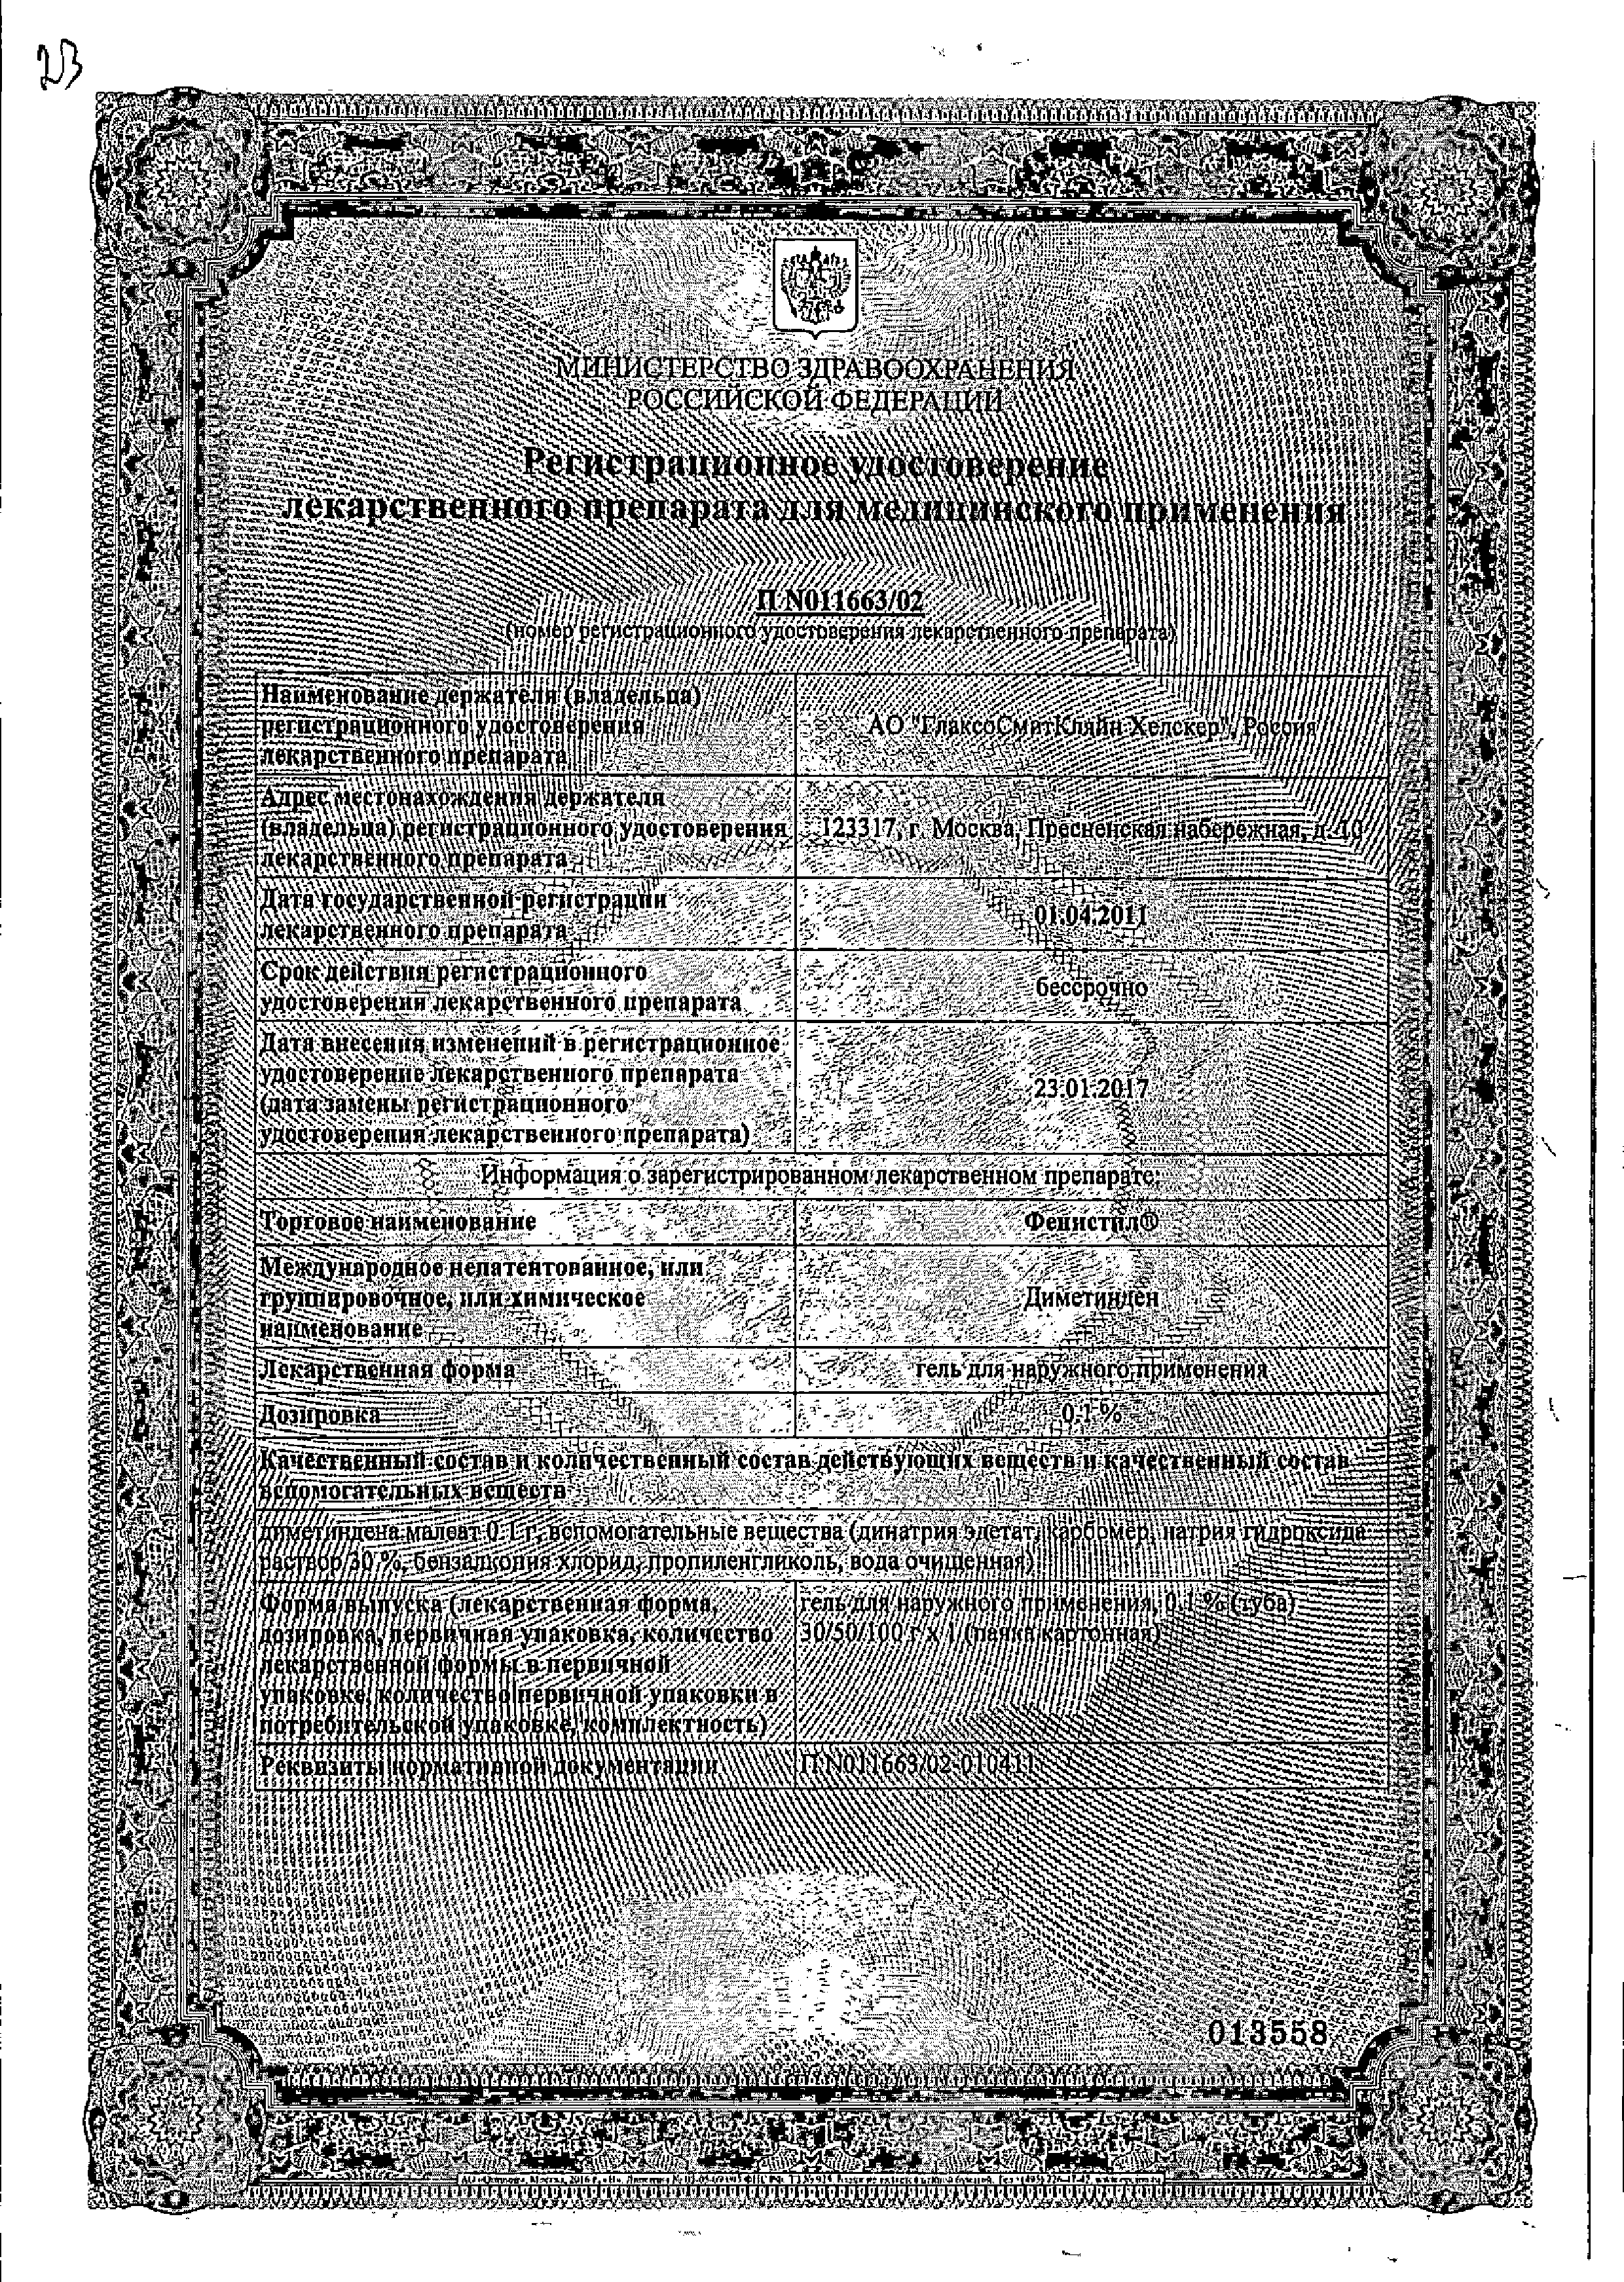 Фенистил сертификат